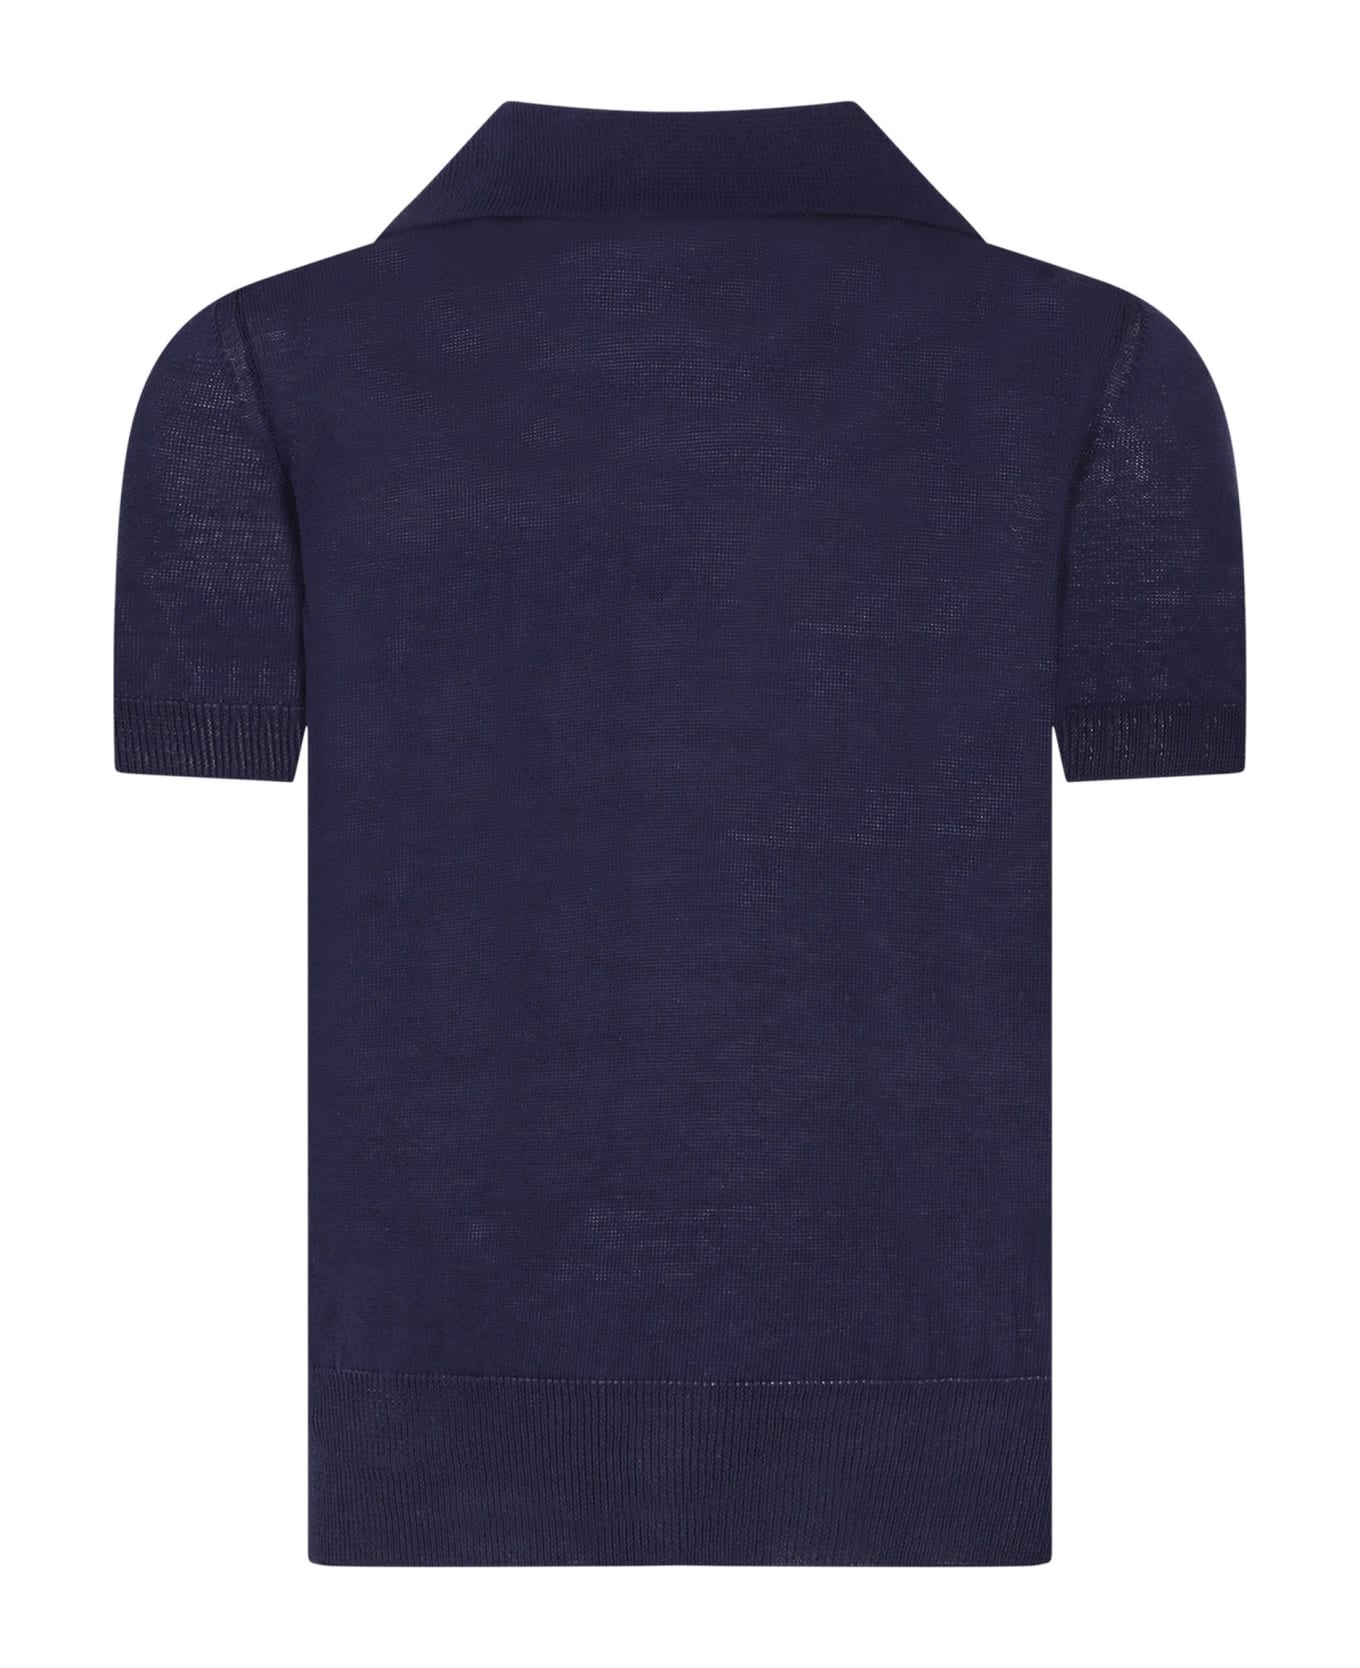 Neil Barrett Blue Polo Shirt With Iconic Thunderbolt For Boy - Blue